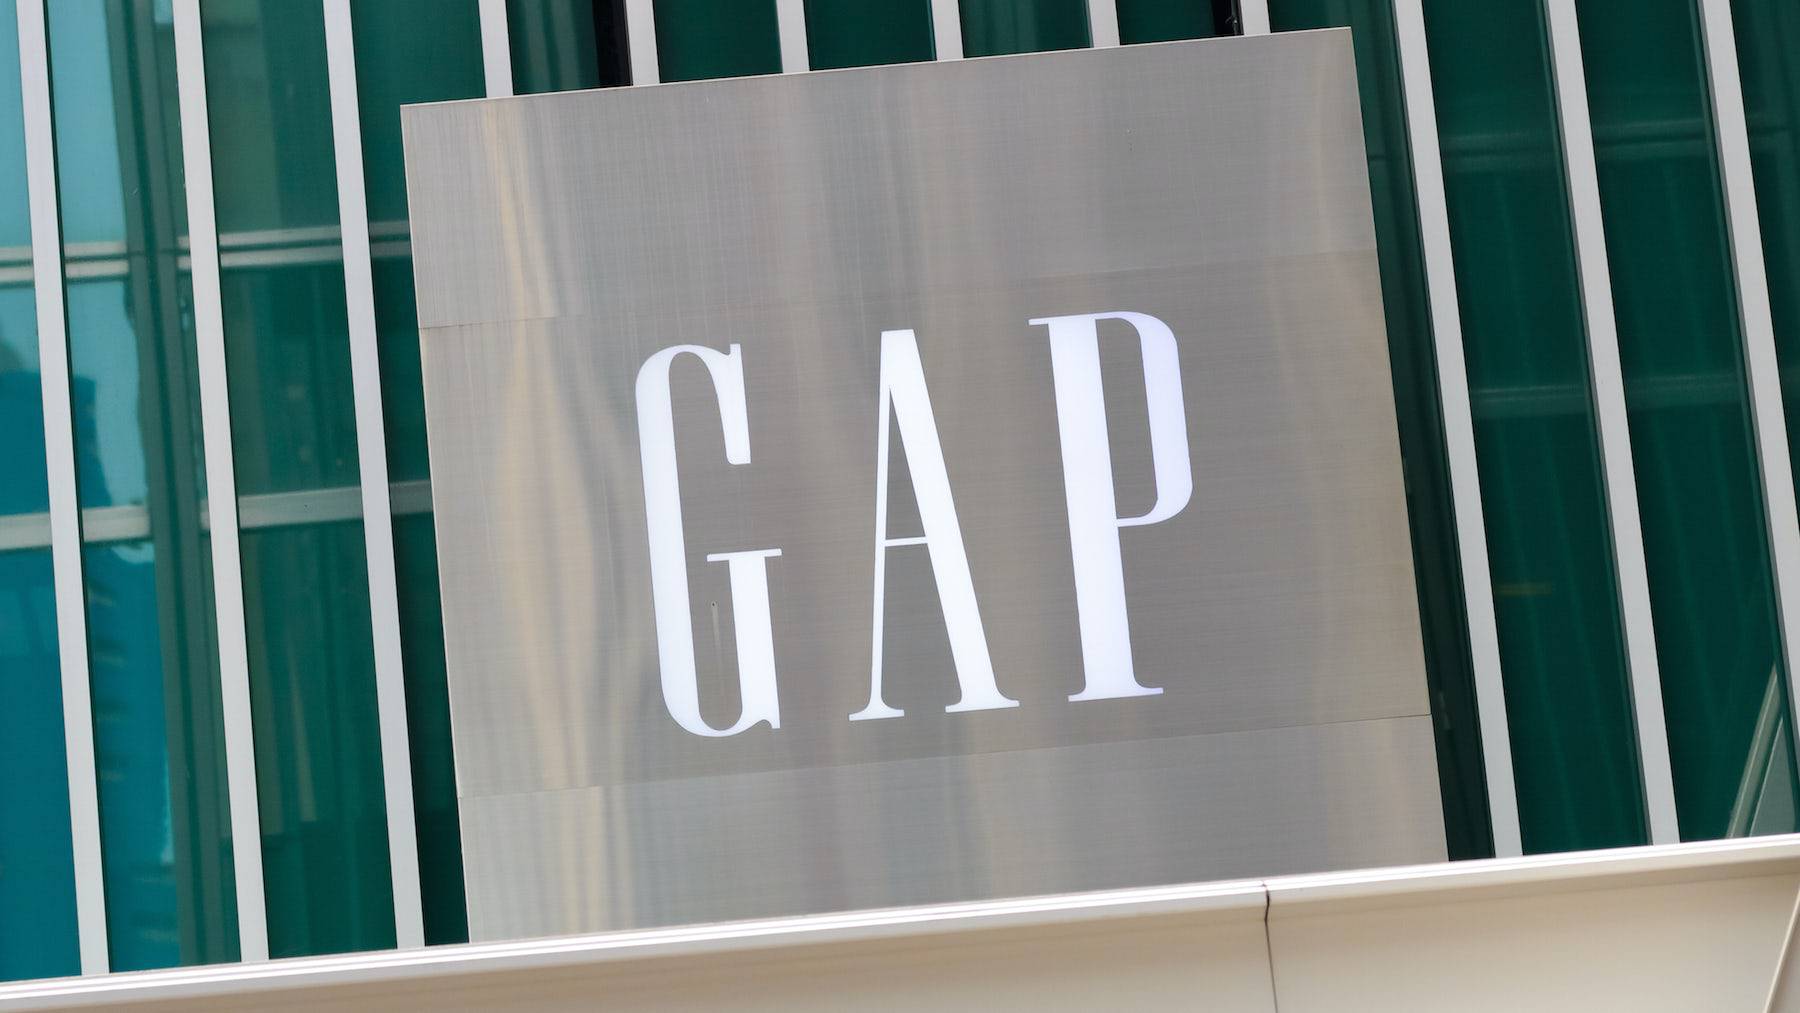 American mall retailer Gap Inc.'s logo.